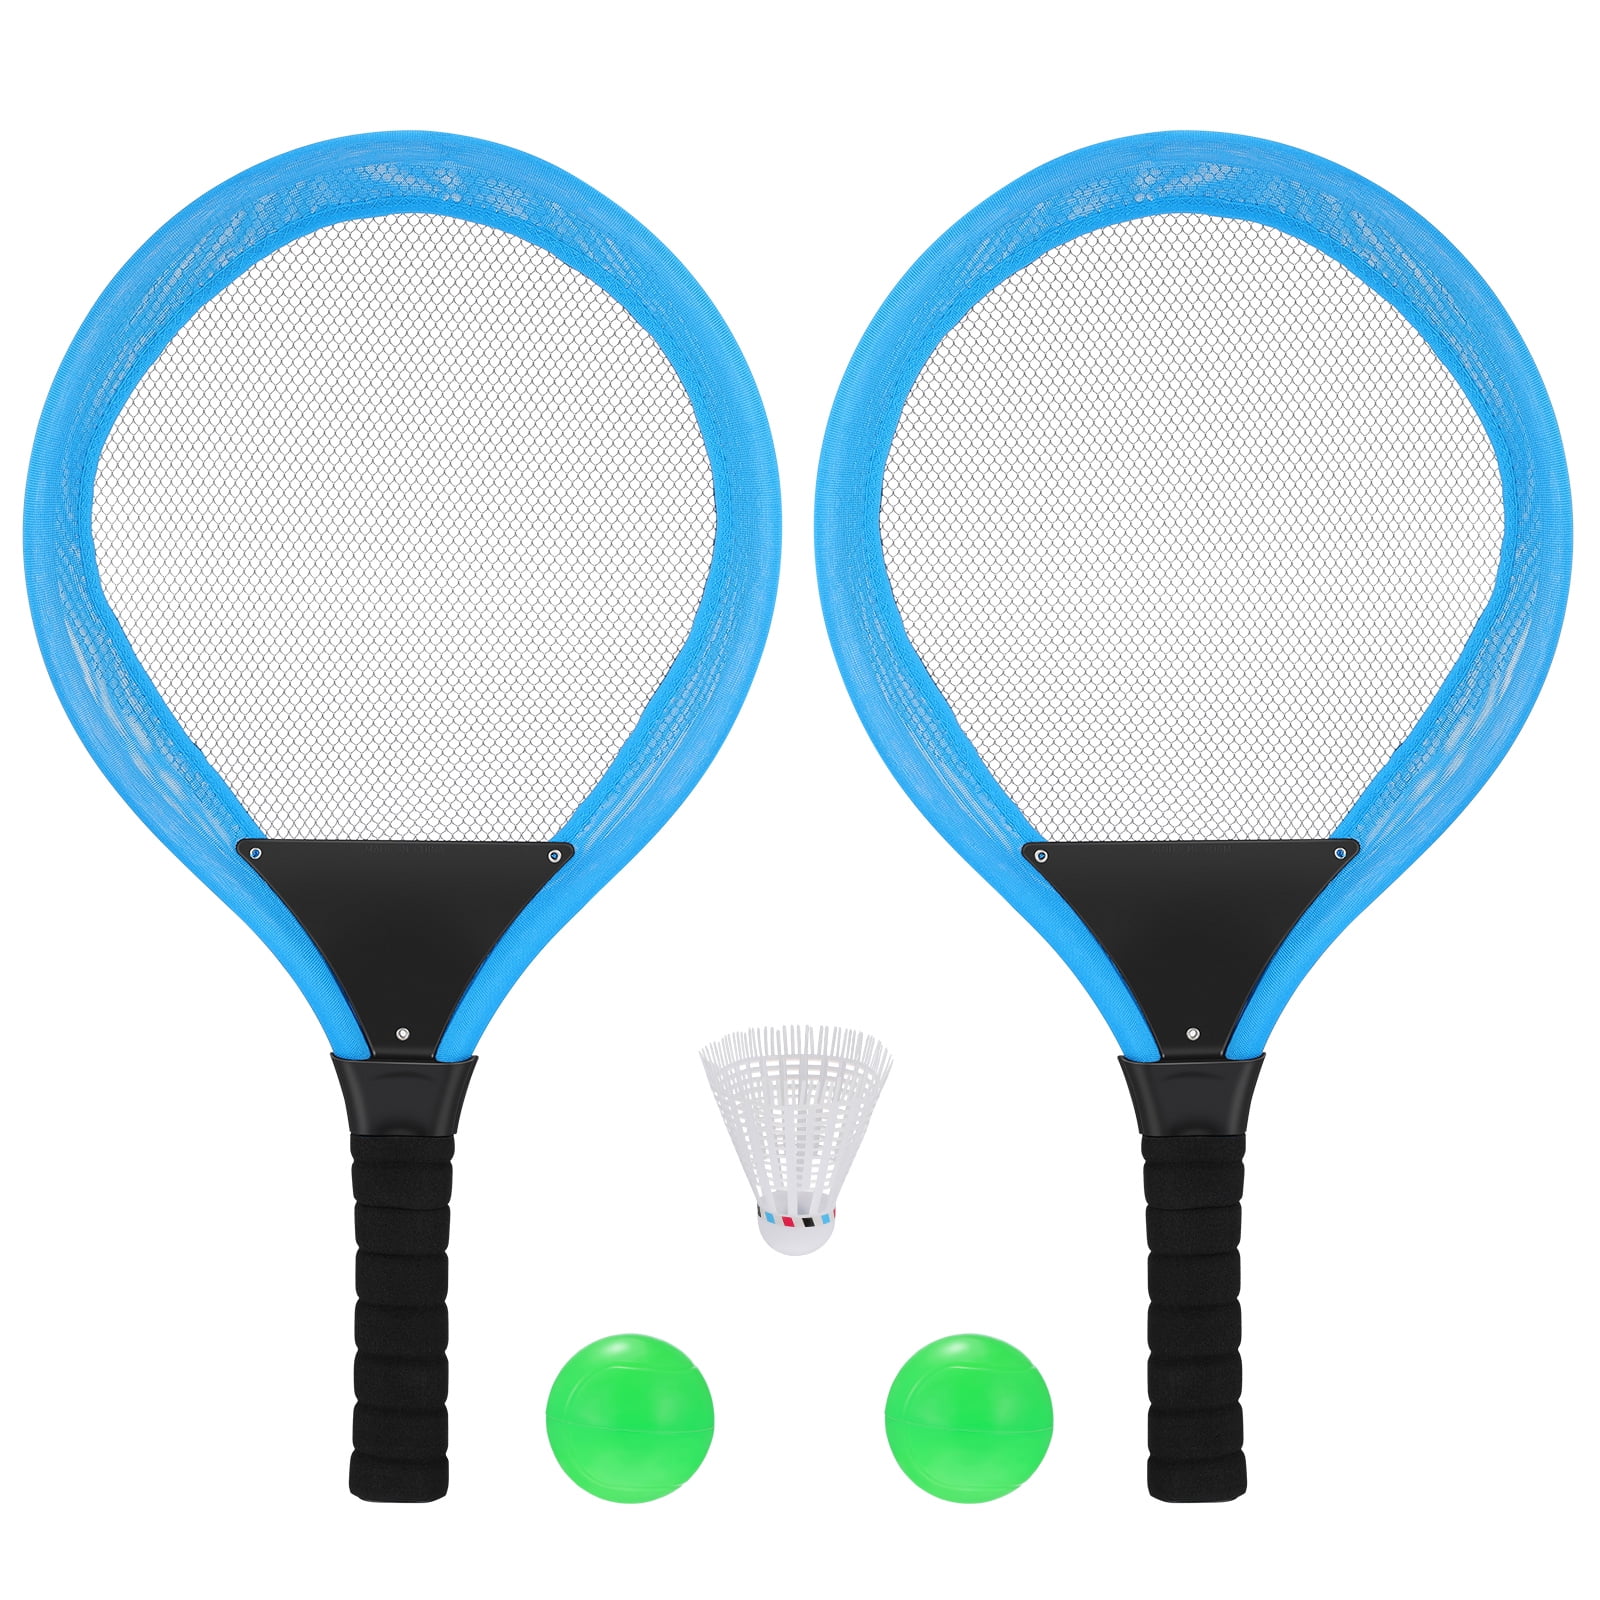 CA Black 35m Adhesive Anti-Slip Grip Tape For Tennis Badminton Squash Racket